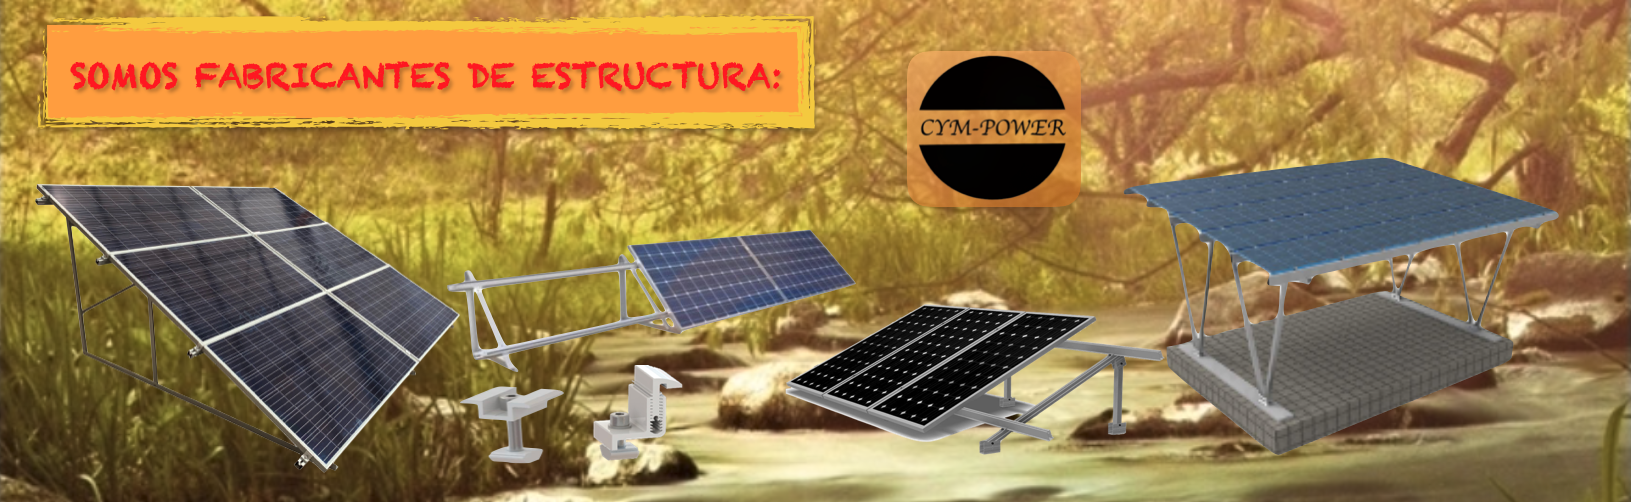 Estructura_placas_solares_aluminio_anodizado_kit_placas_solares